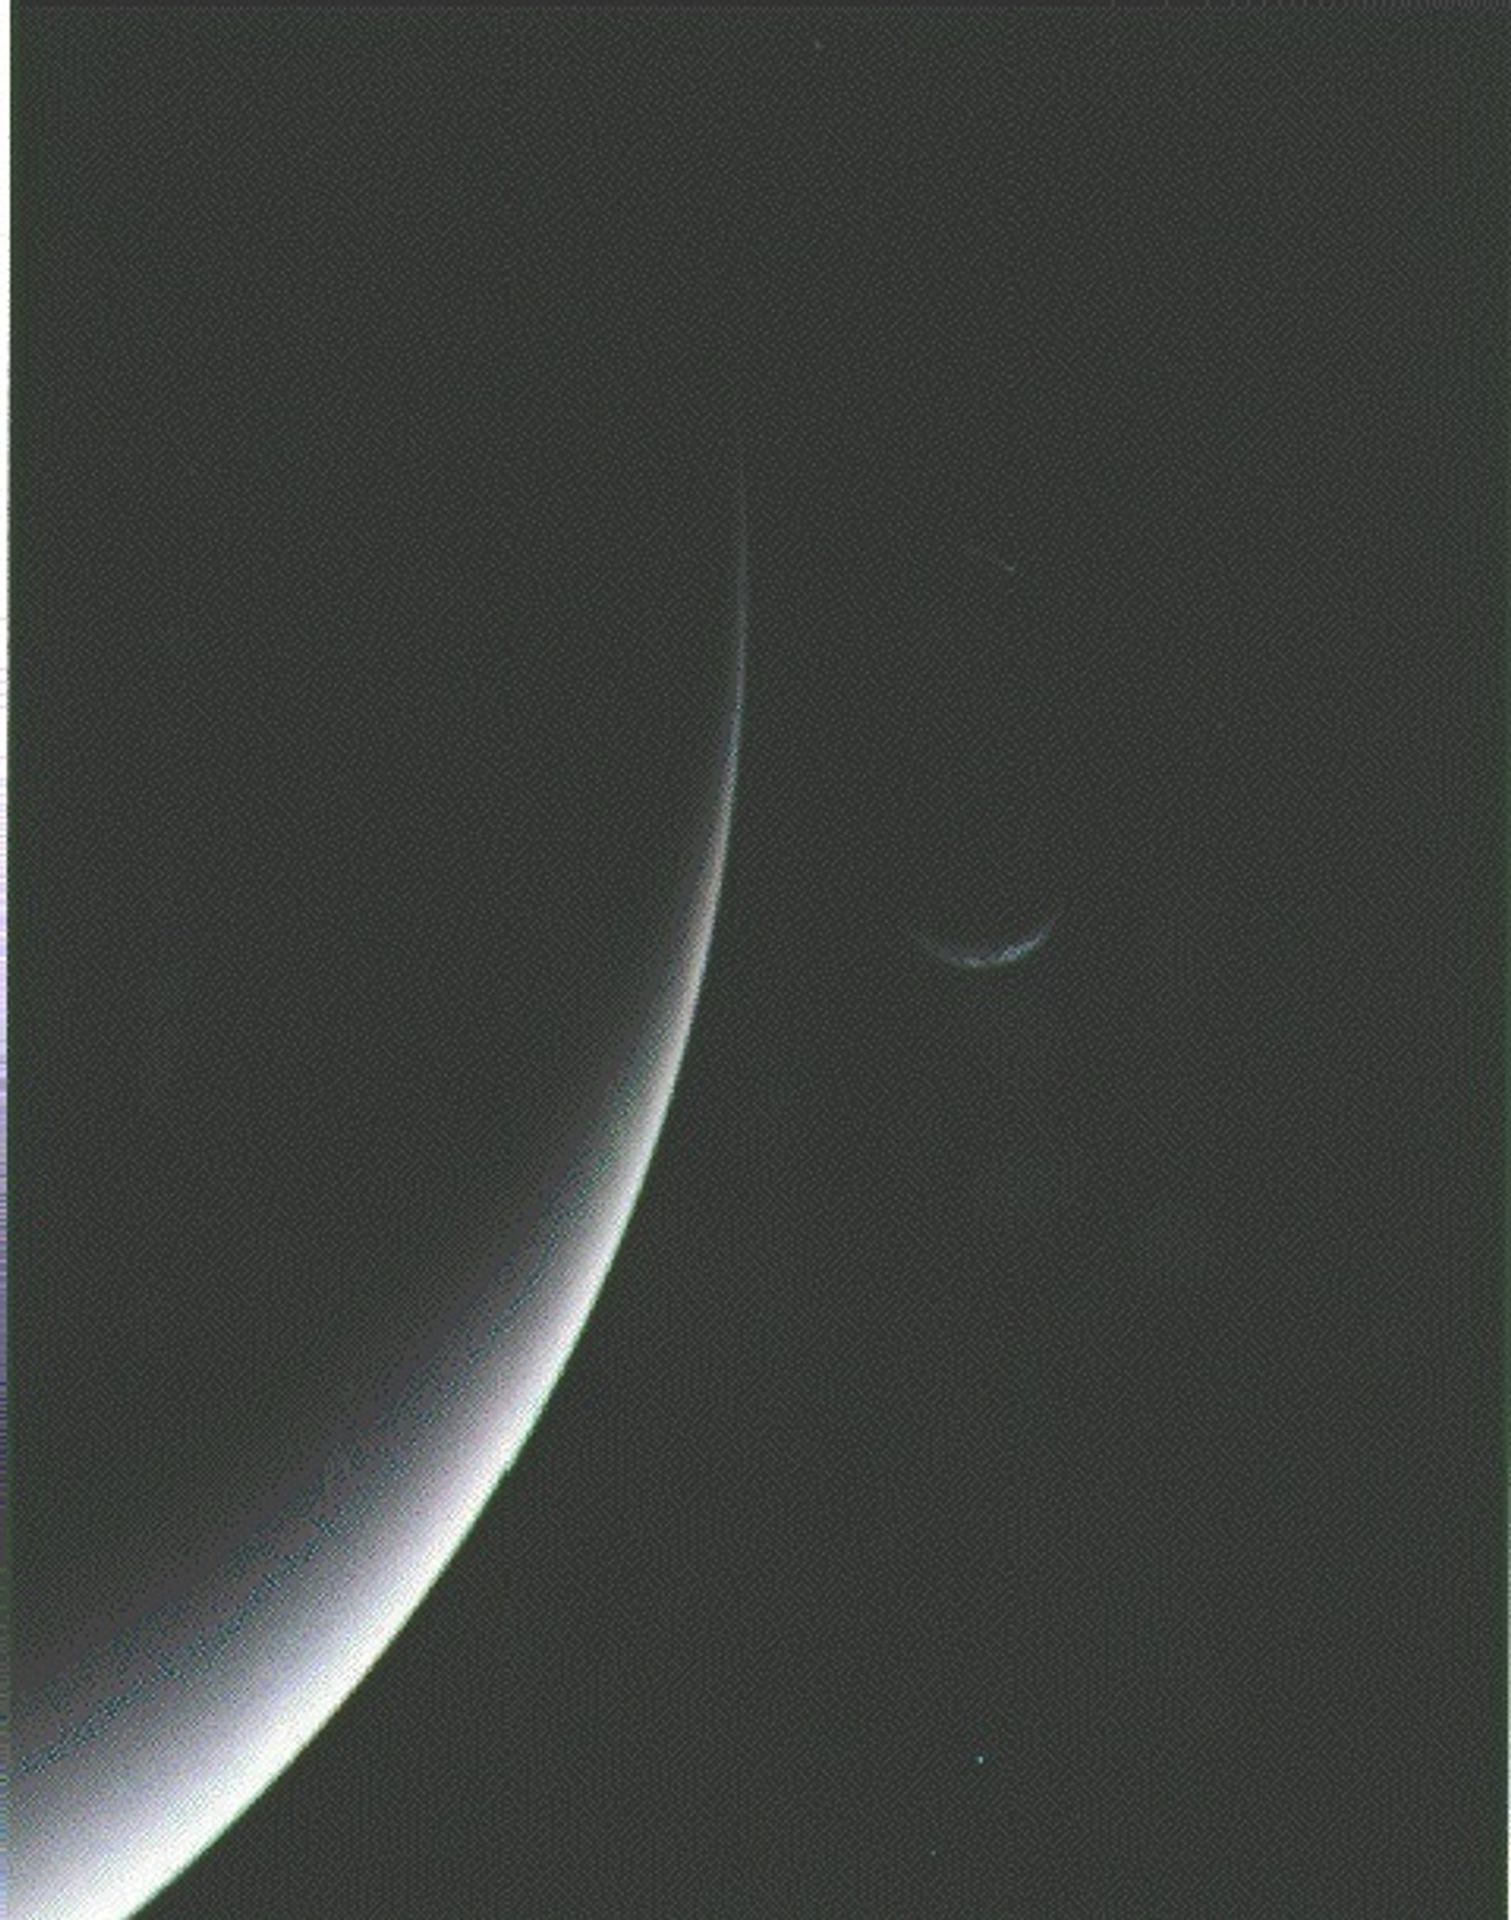 GALERIE: Co nafotila sonda Voyager 1 - Neptun - 3 - GALERIE: Co nafotila sonda Voyager 1 - NEPTUN (2/4)